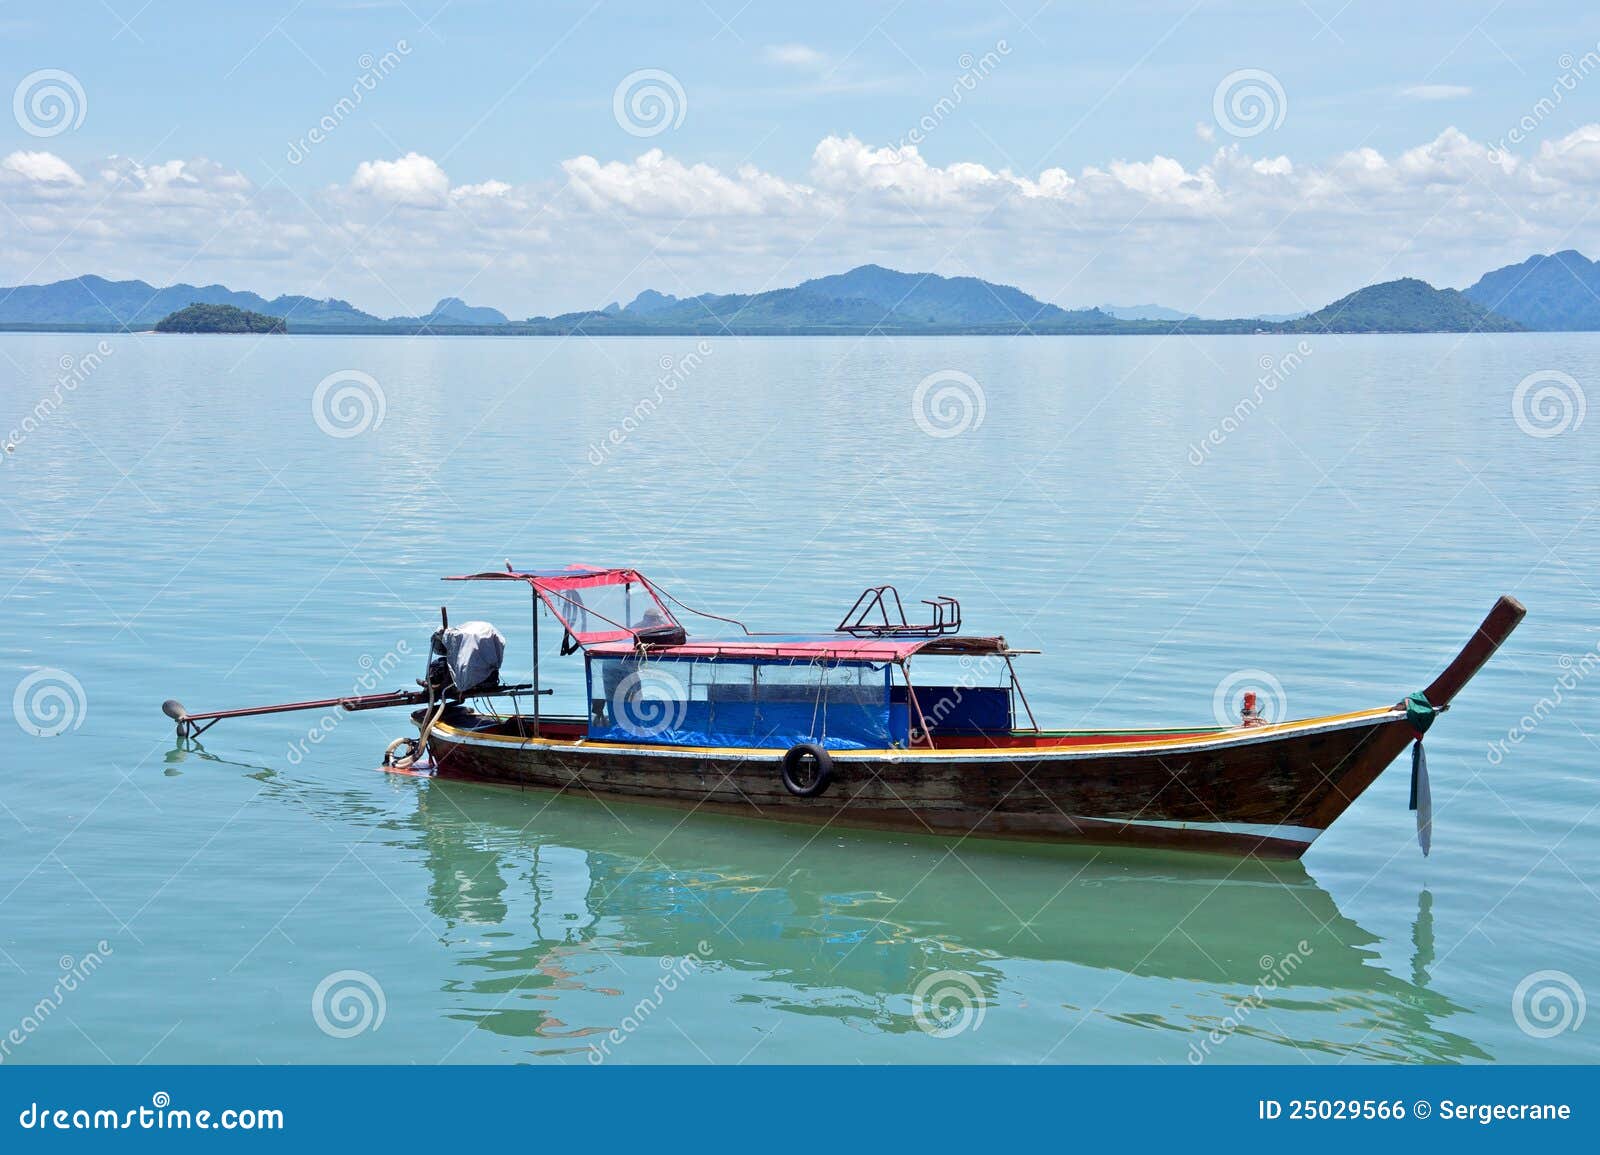 Wooden Fishing Boat Royalty Free Stock Image - Image: 25029566